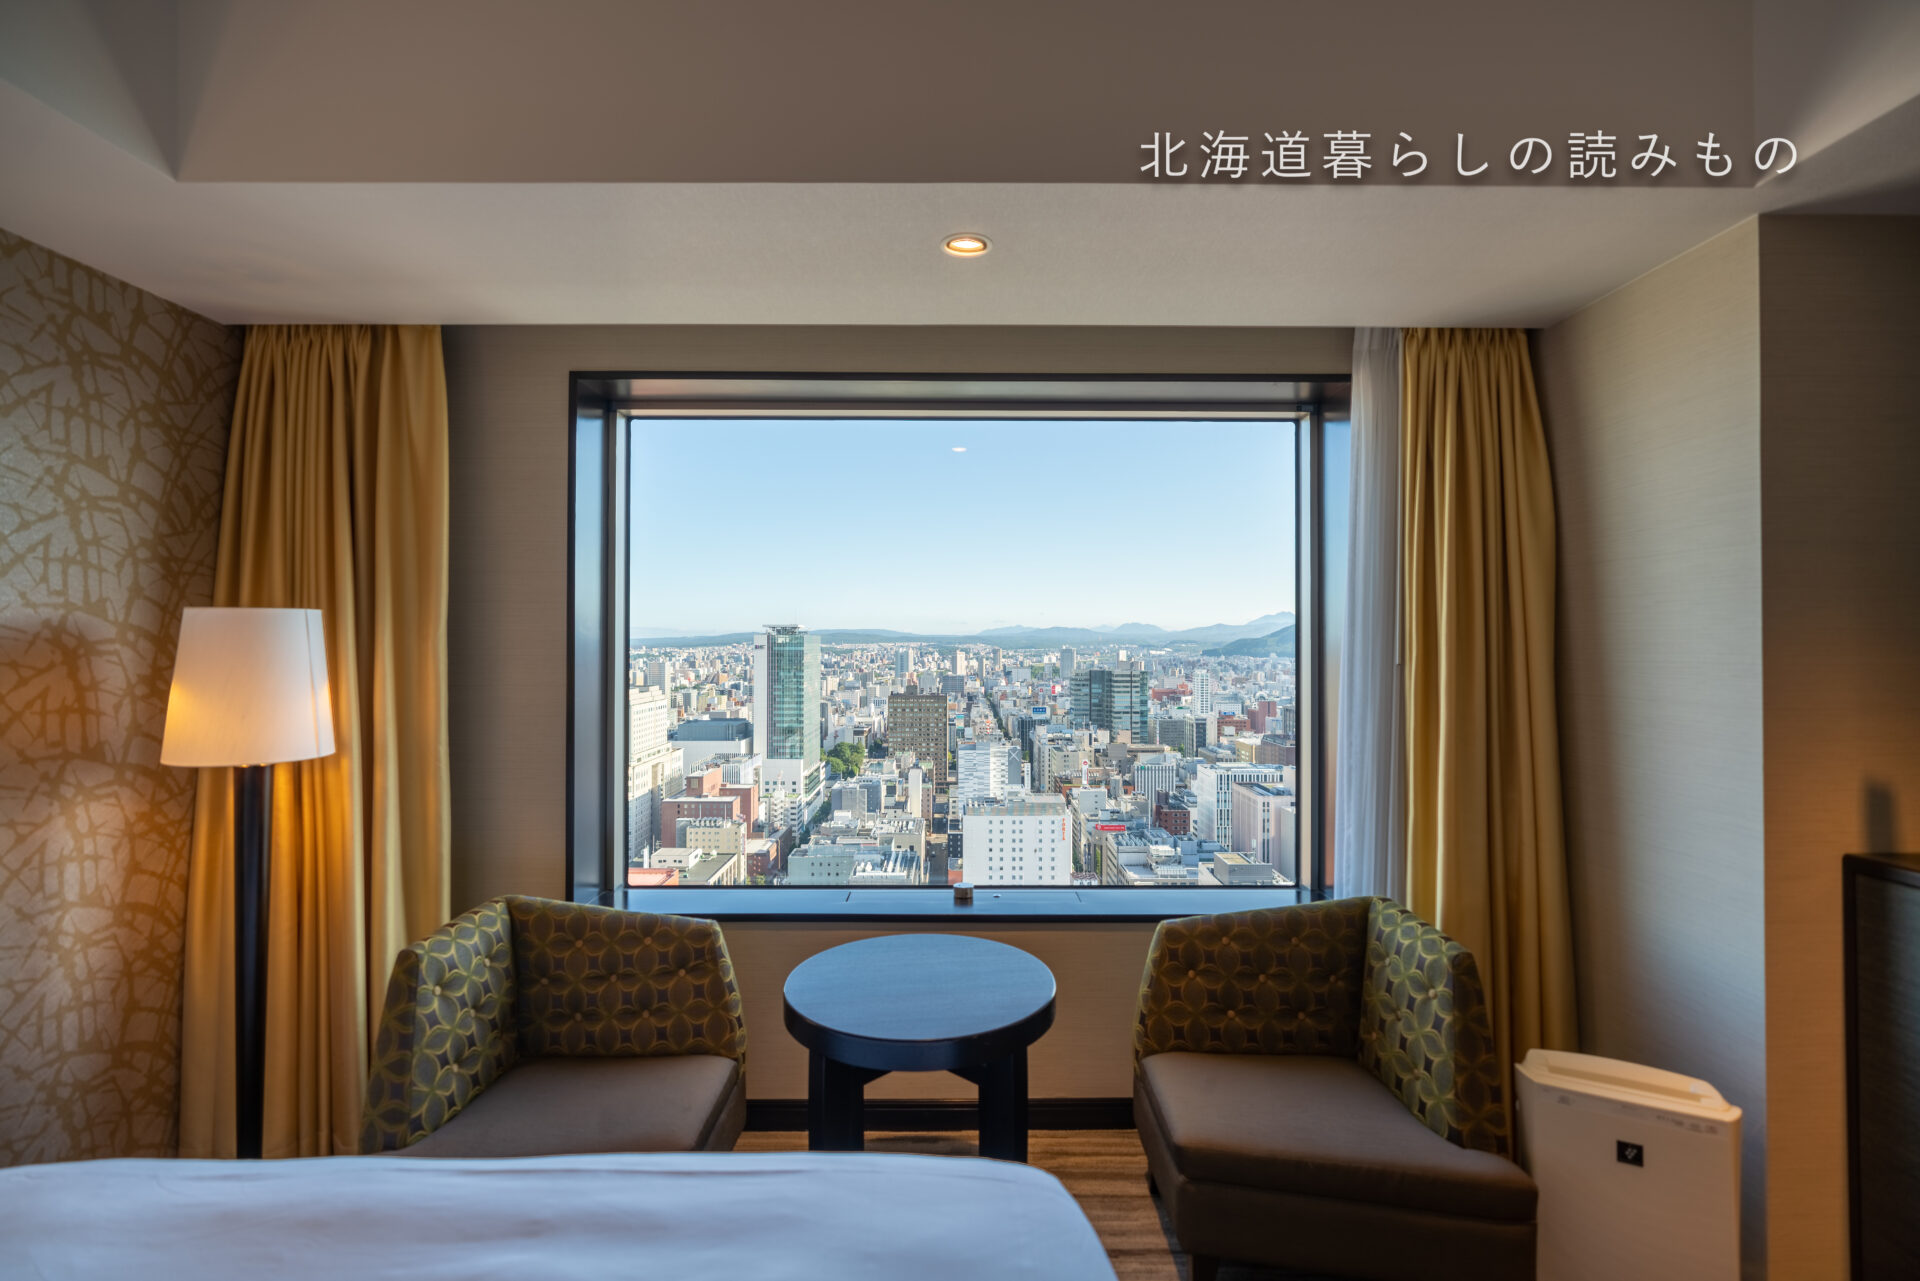 JRタワーホテル日航札幌 JR Tower Hotel Nikko Sapporo